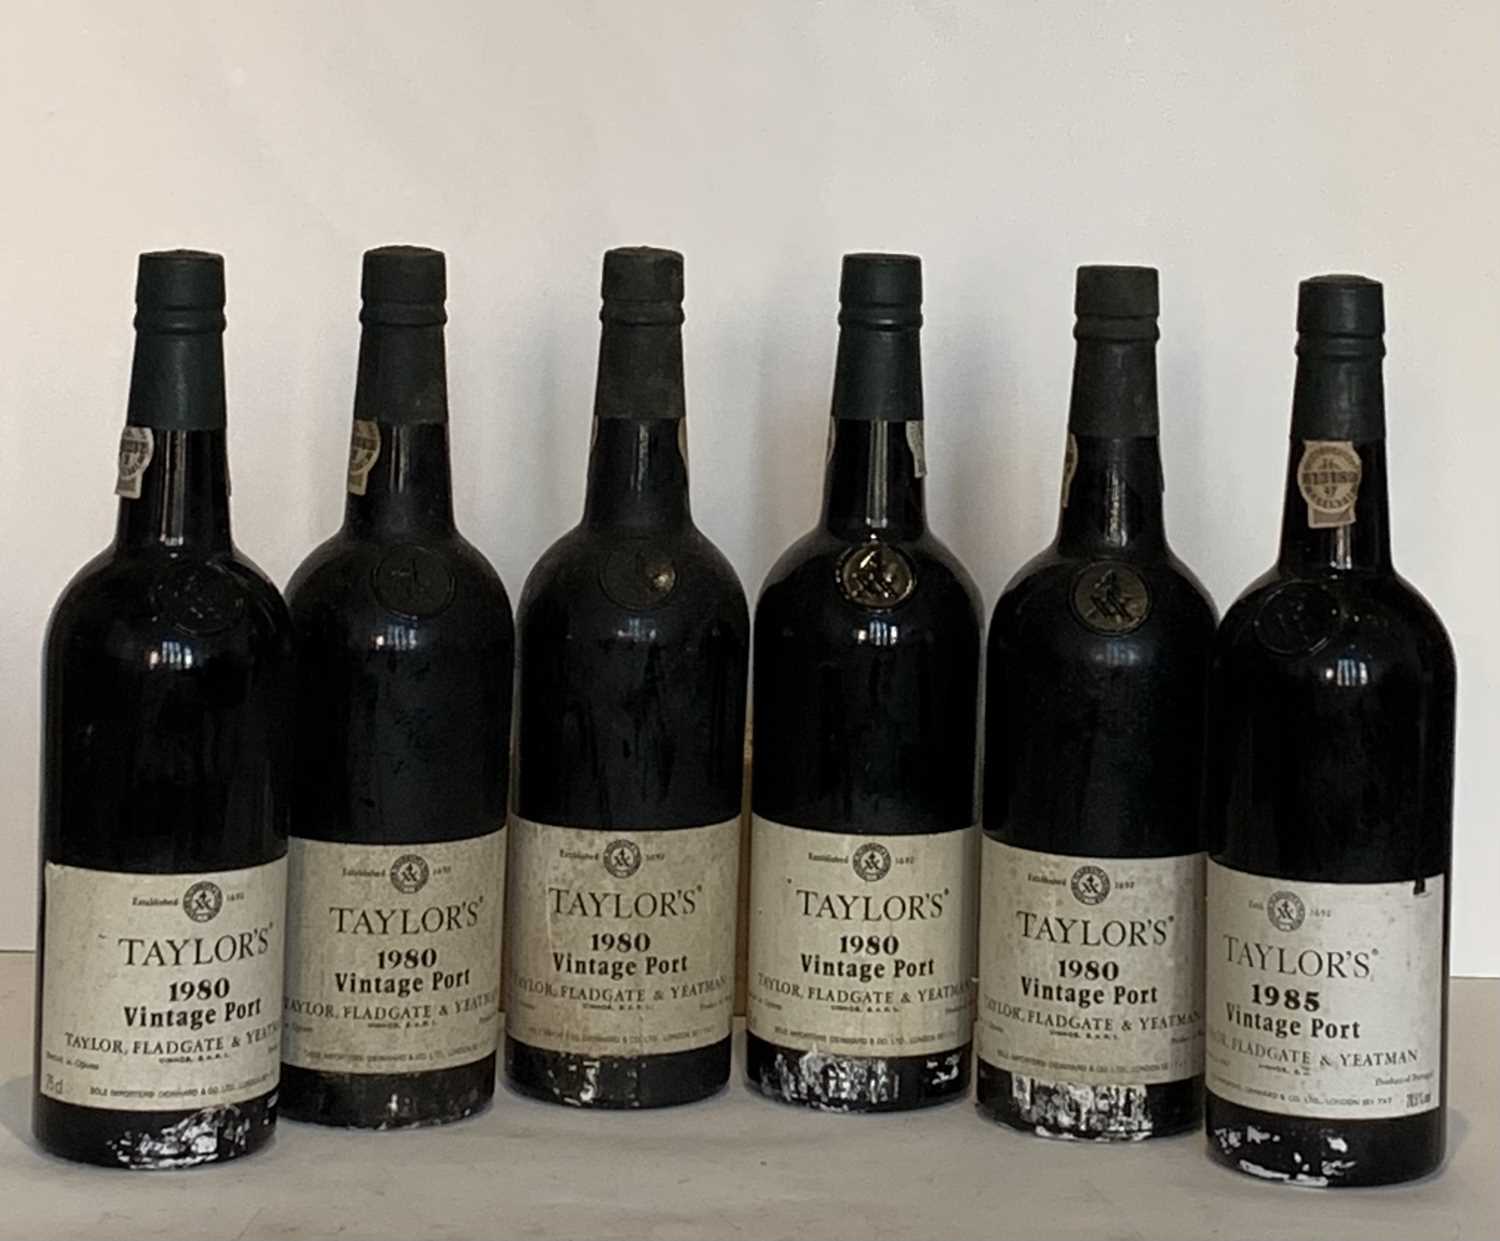 Lot 52 - 6 Bottles Mixed Lot Taylor’s Vintage Port